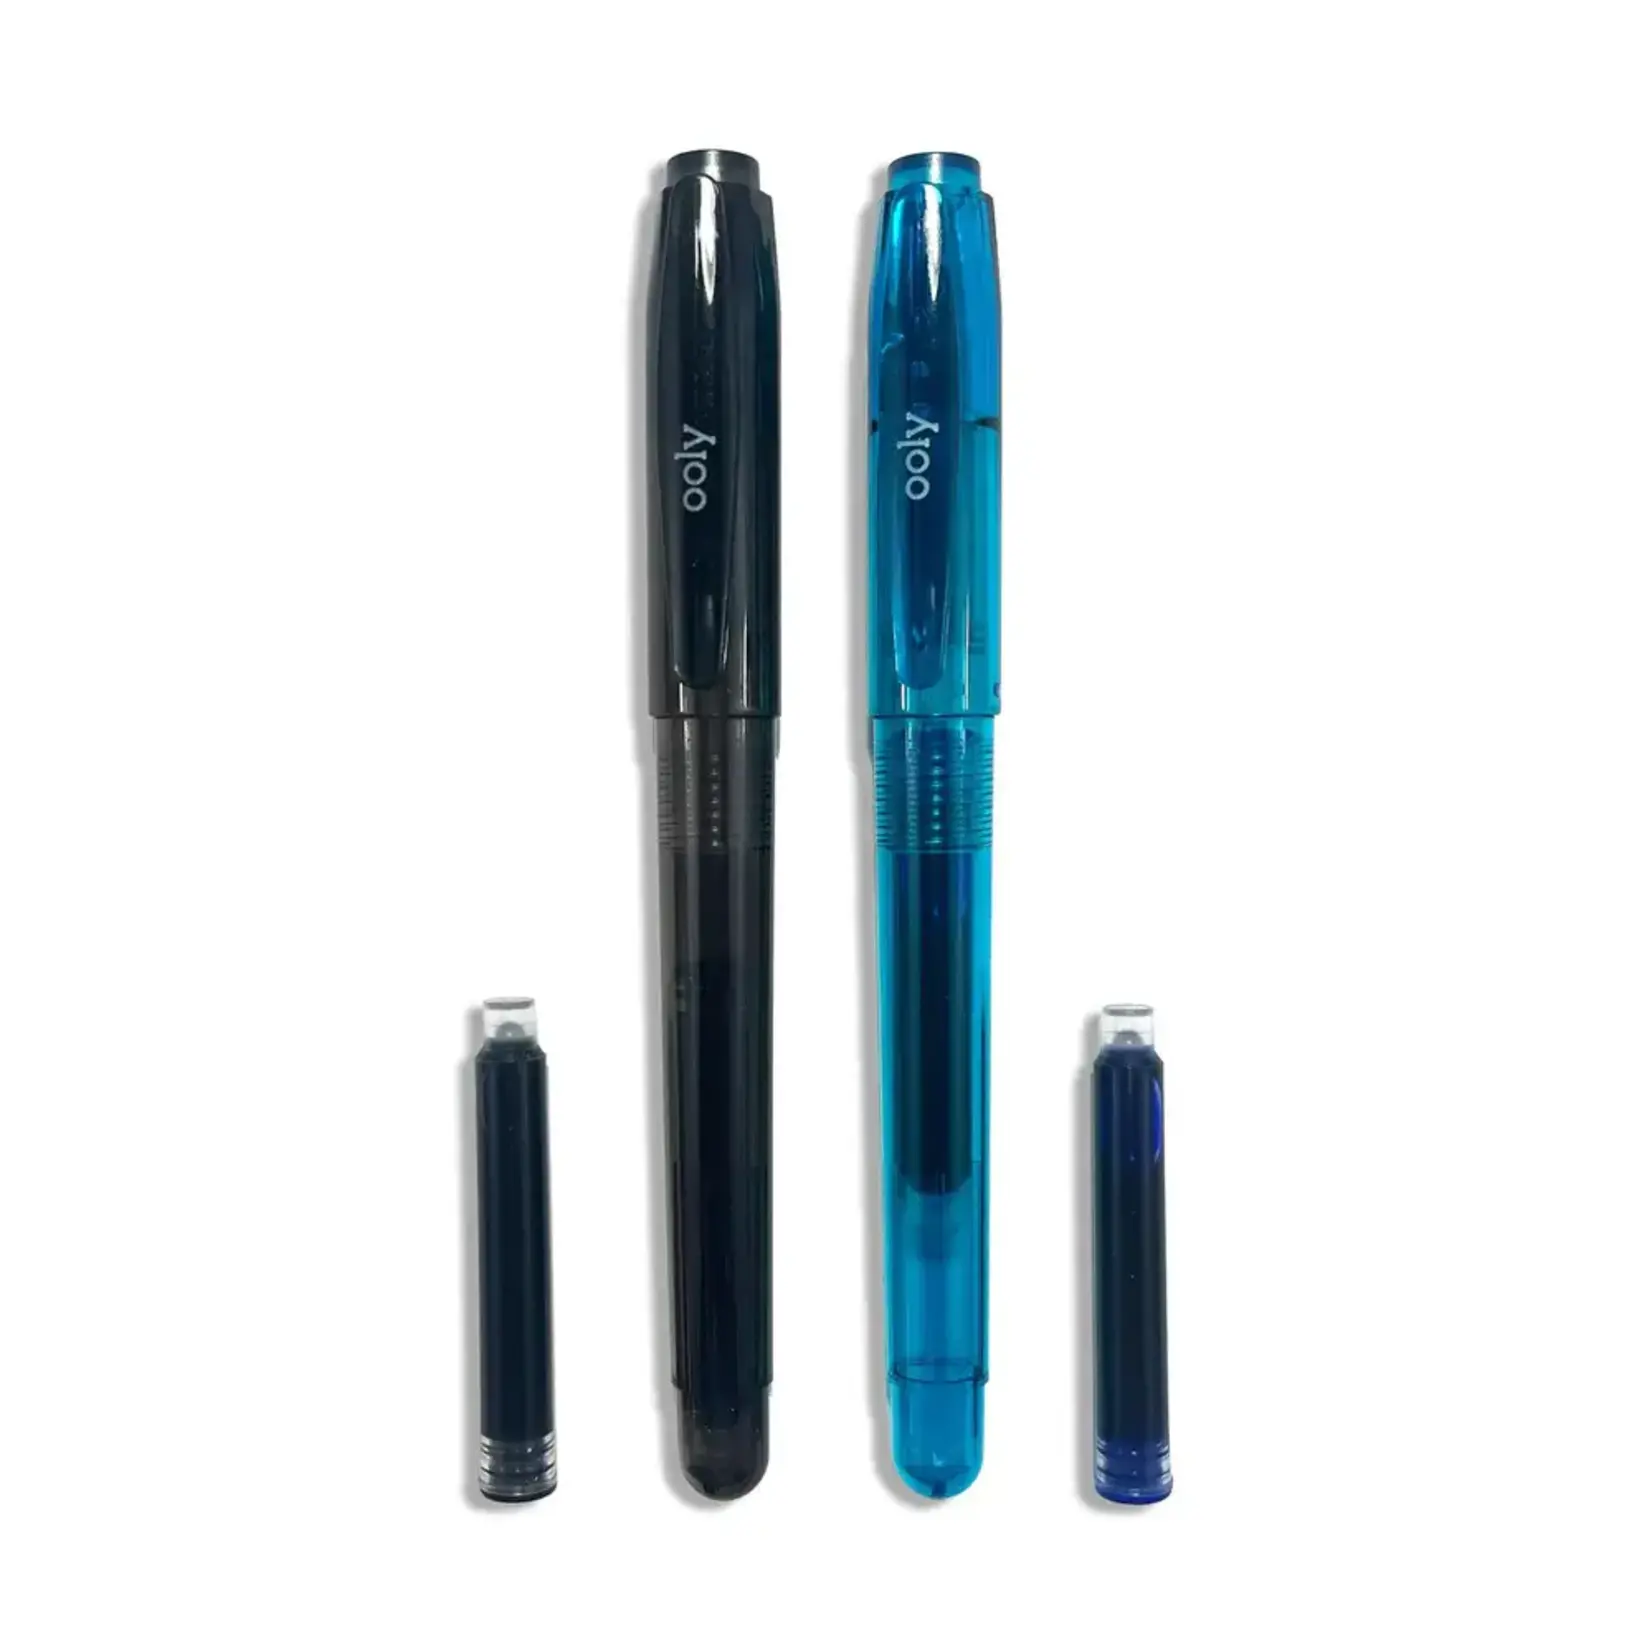 Splendid Duo Fountain Pens 2 Pack